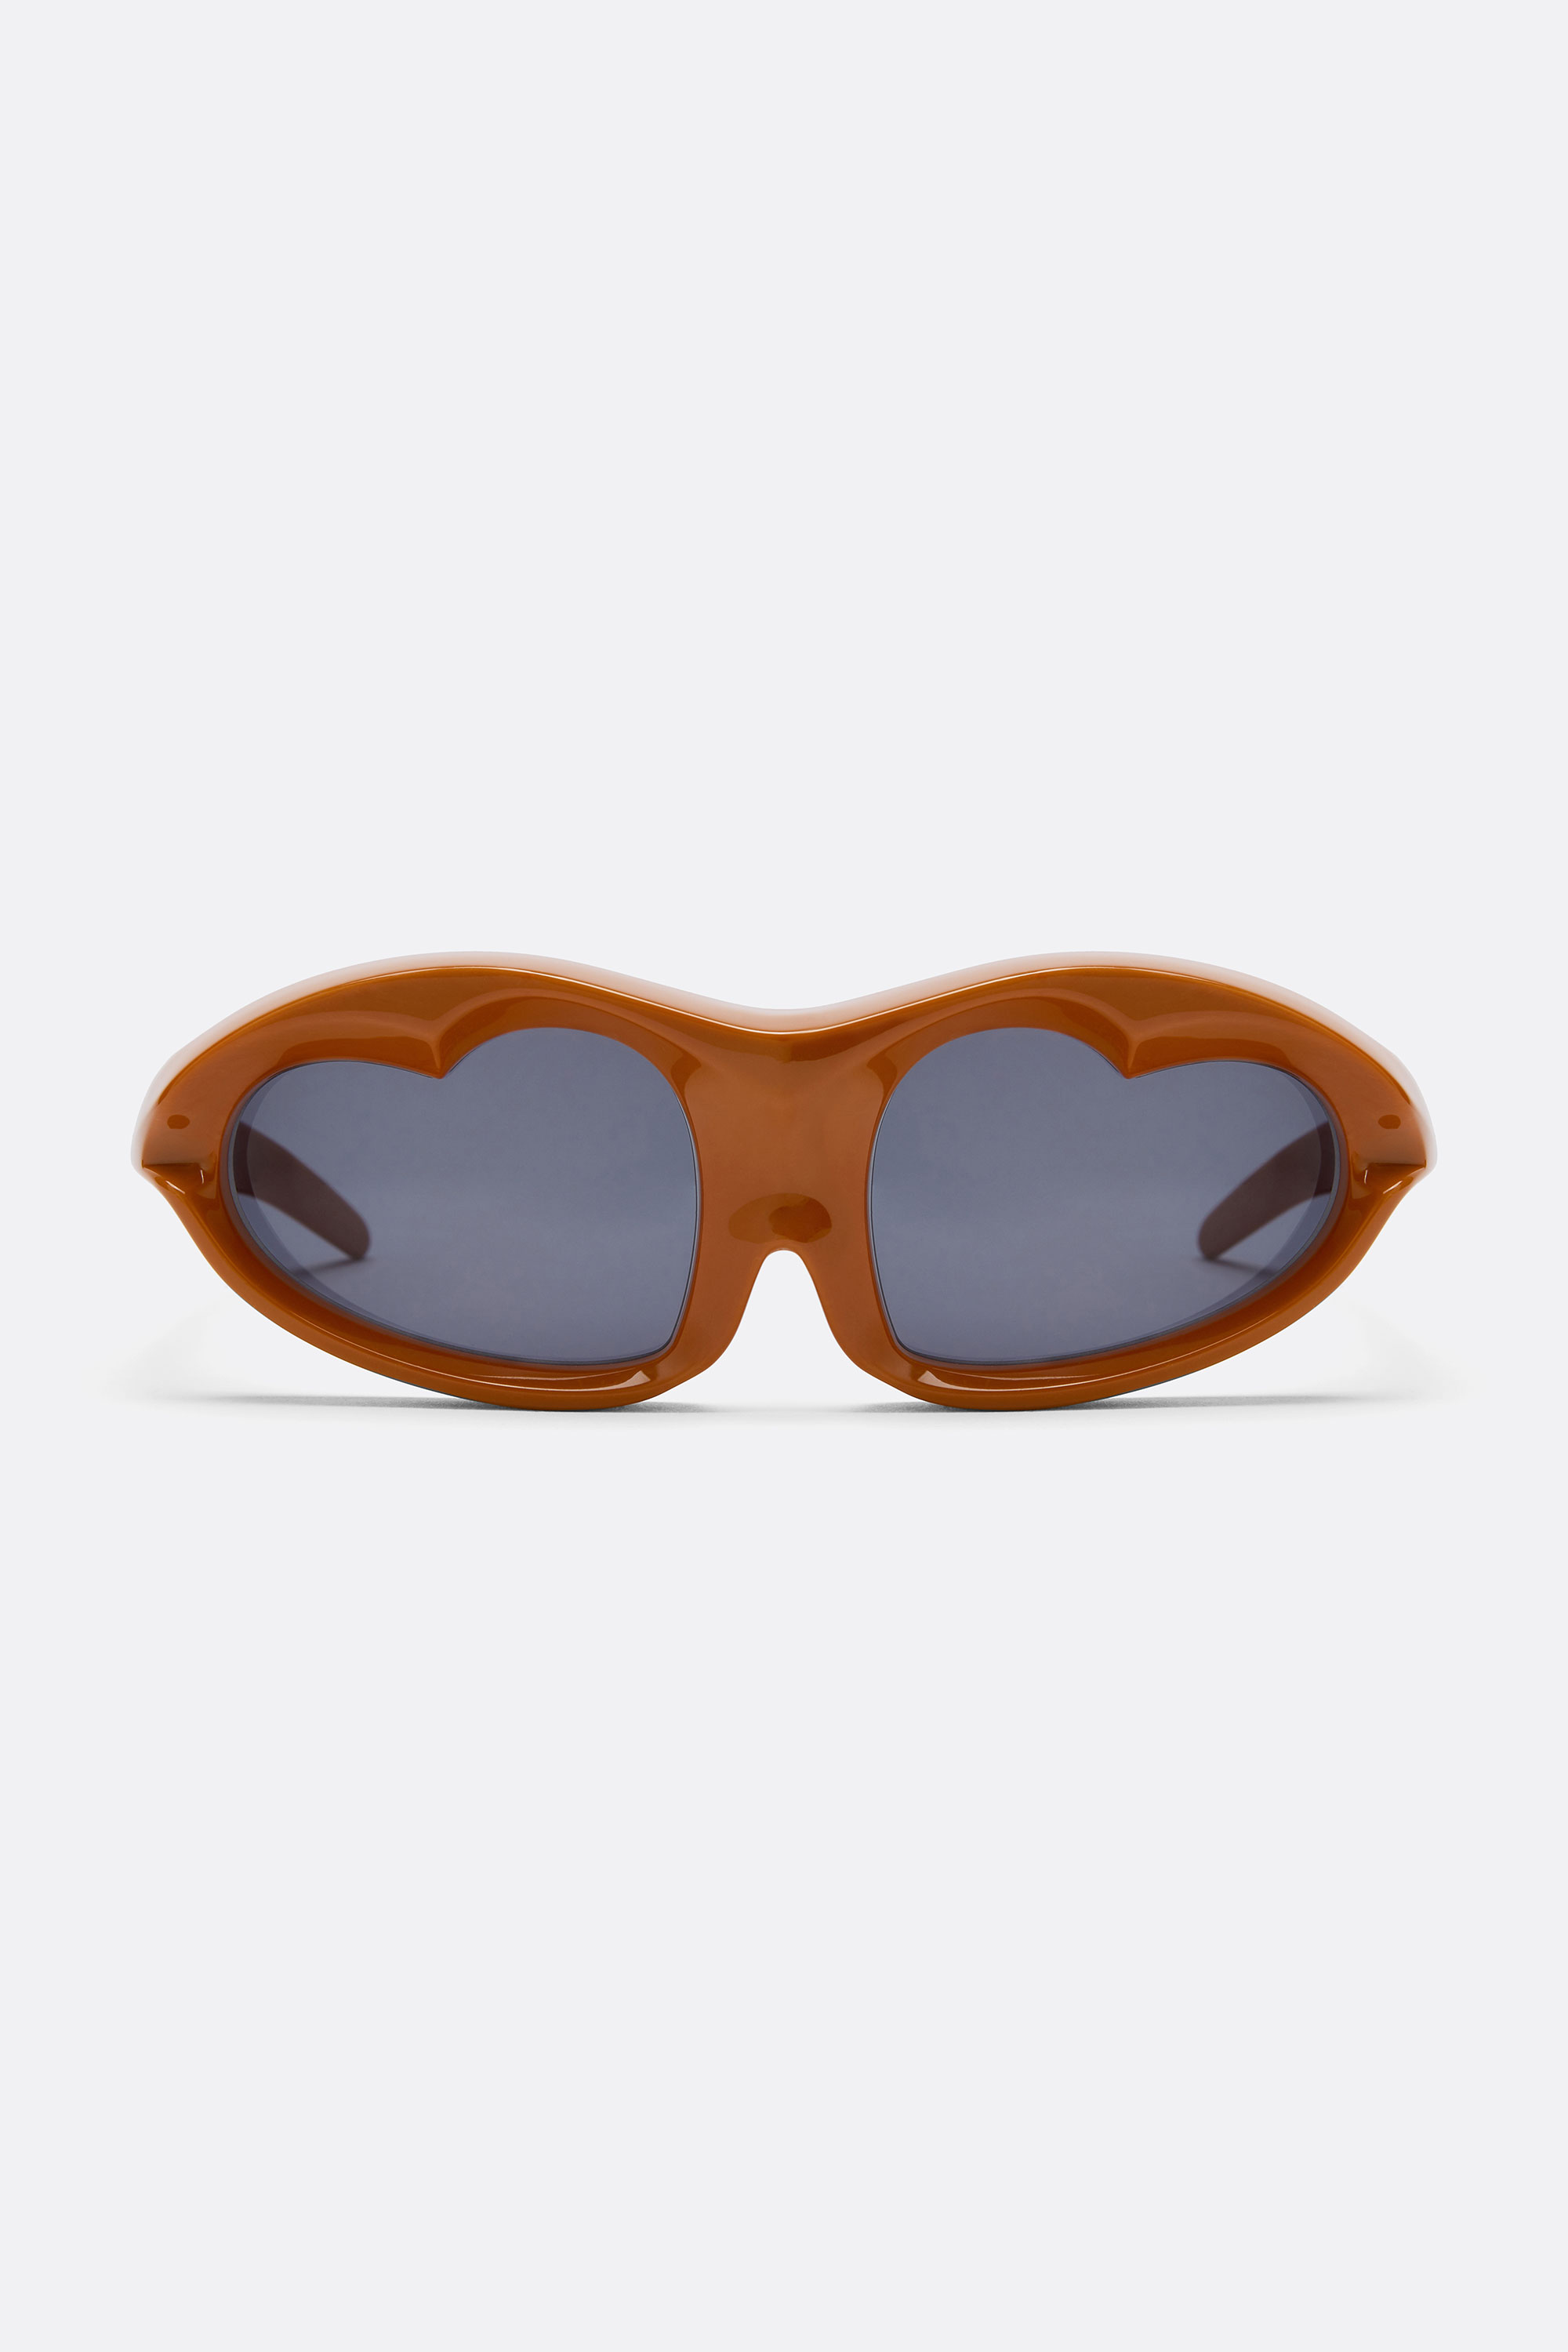 ‘Steamy Windows’ Sunglasses - DORA TEYMUR